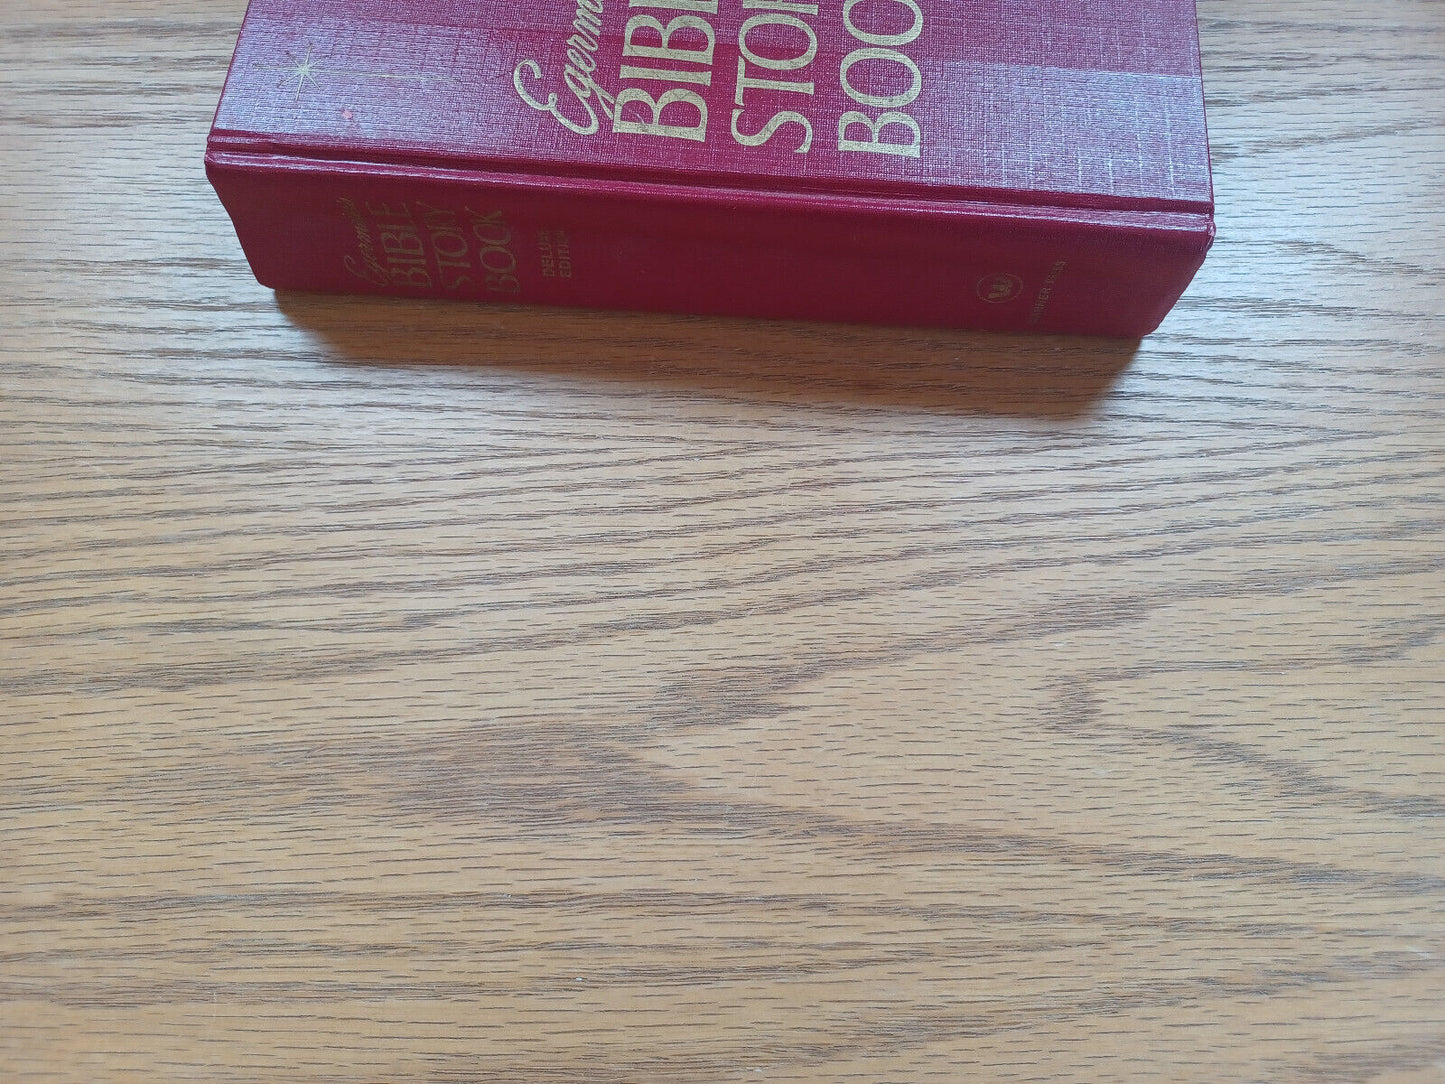 Egermeiers Bible Story Book Deluxe Edition By Elsie Egermeier 1969